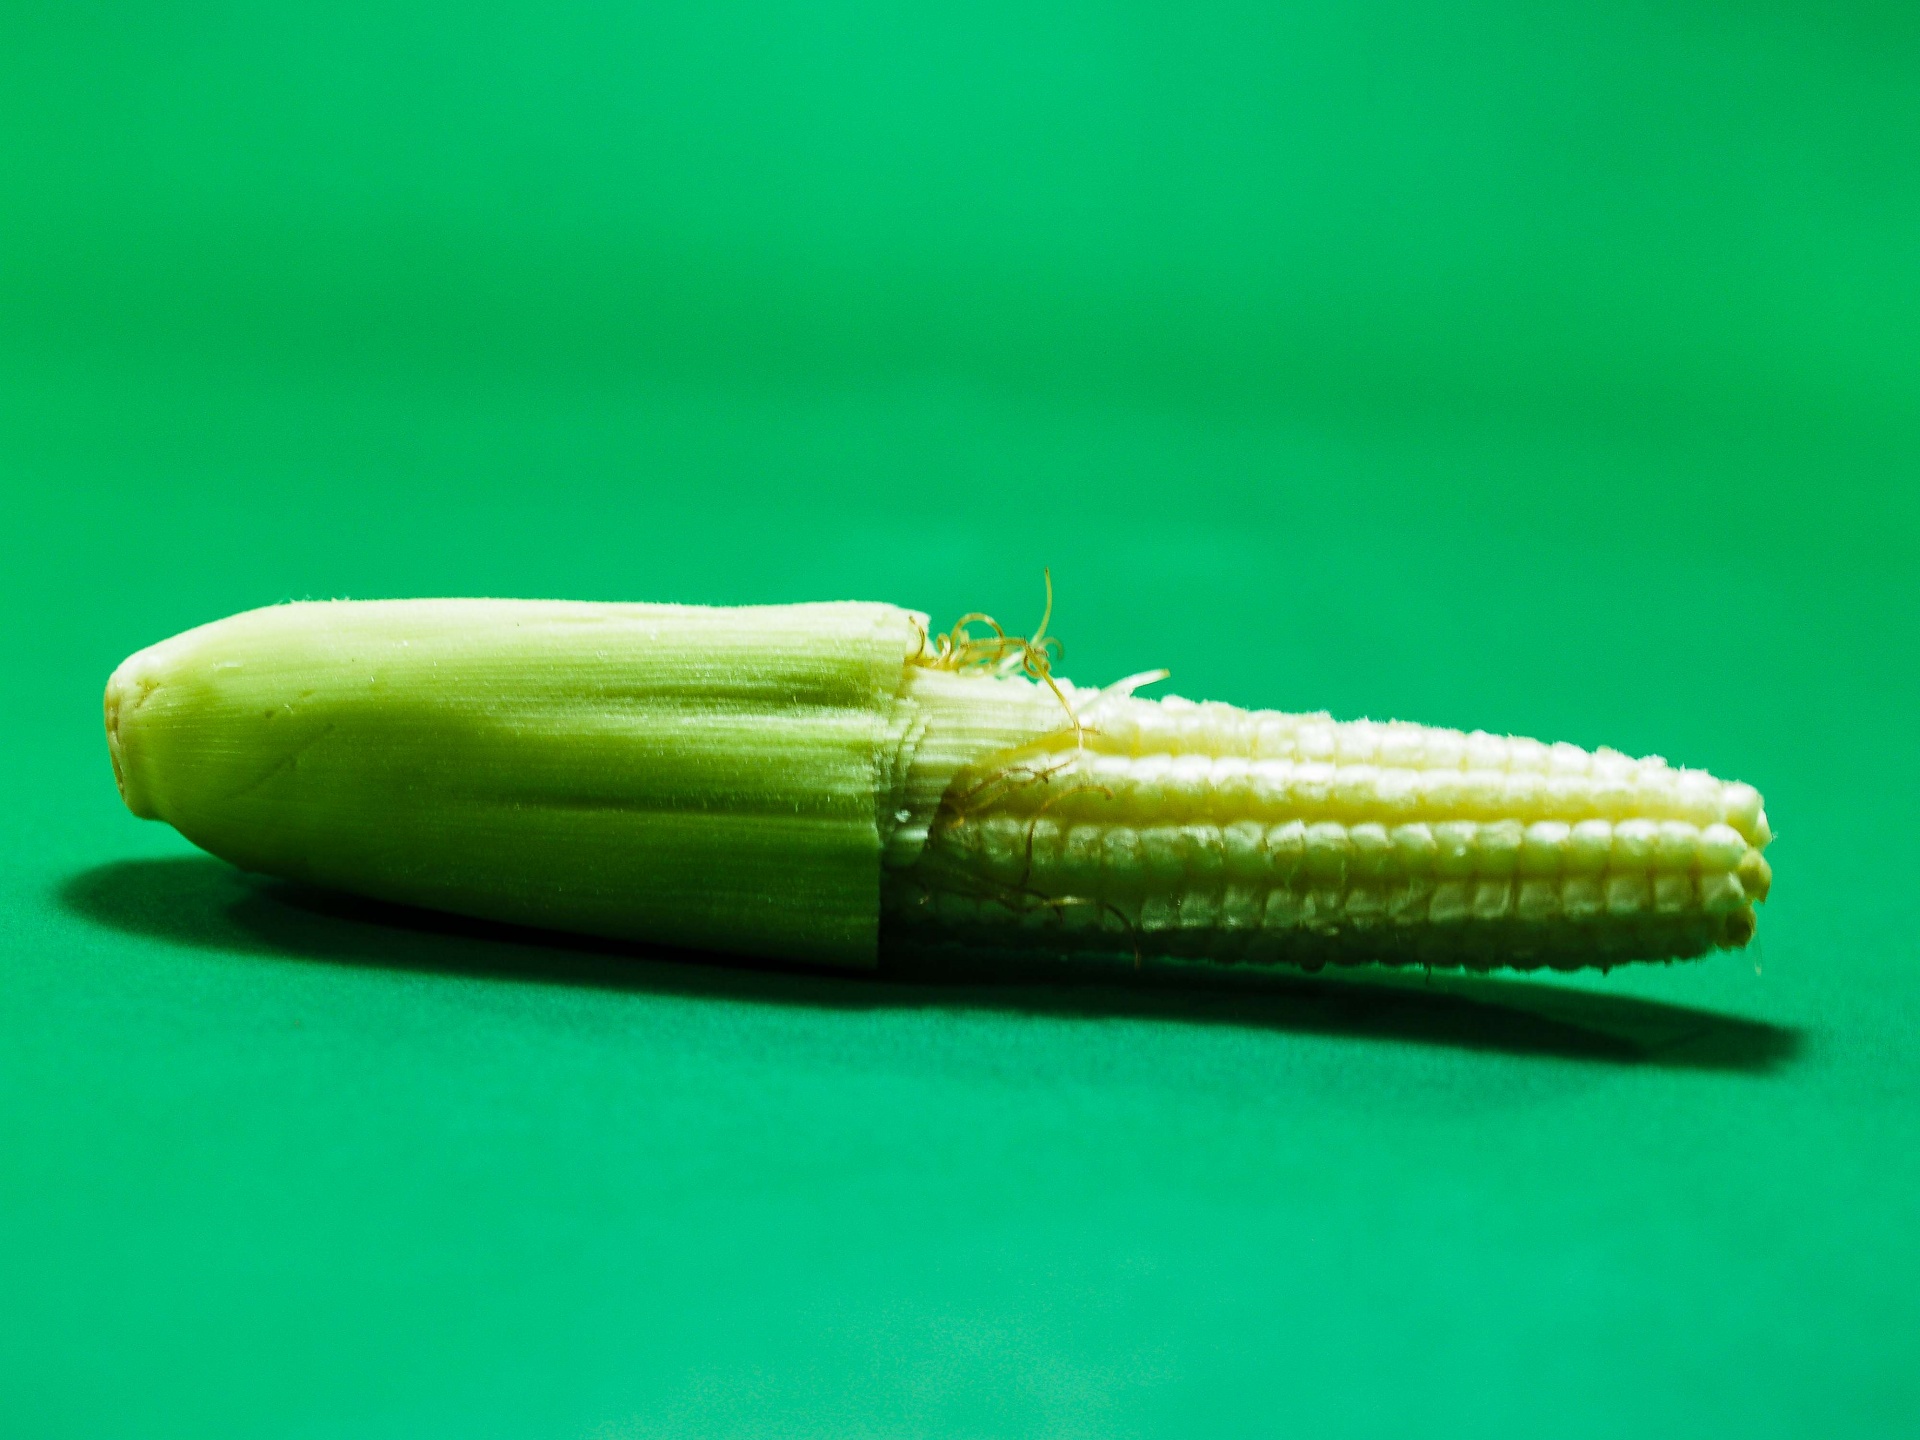 Young Small Corn Closeup